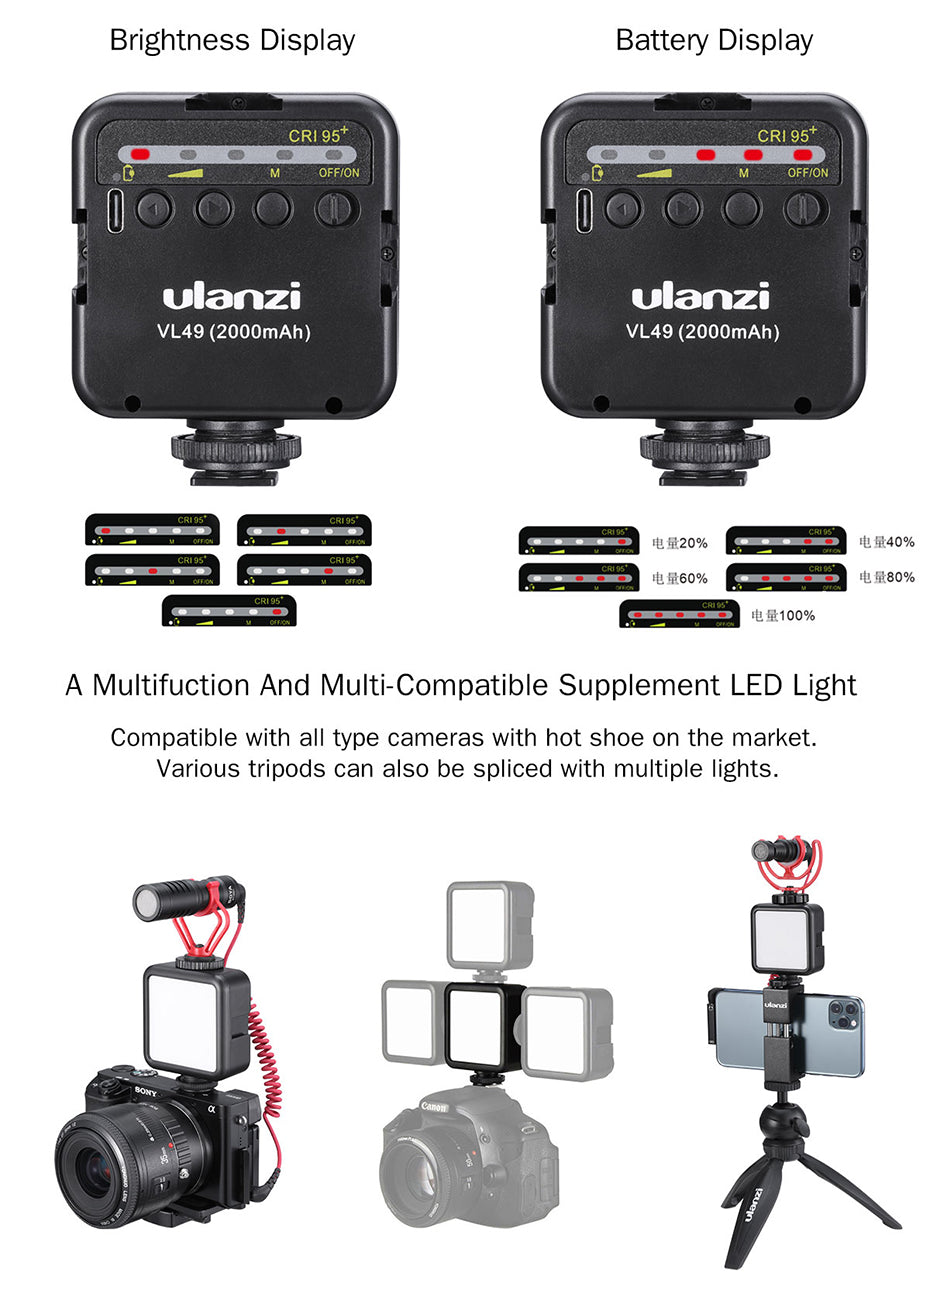 49 LED Flash for DSLR Cameras And Smartphones